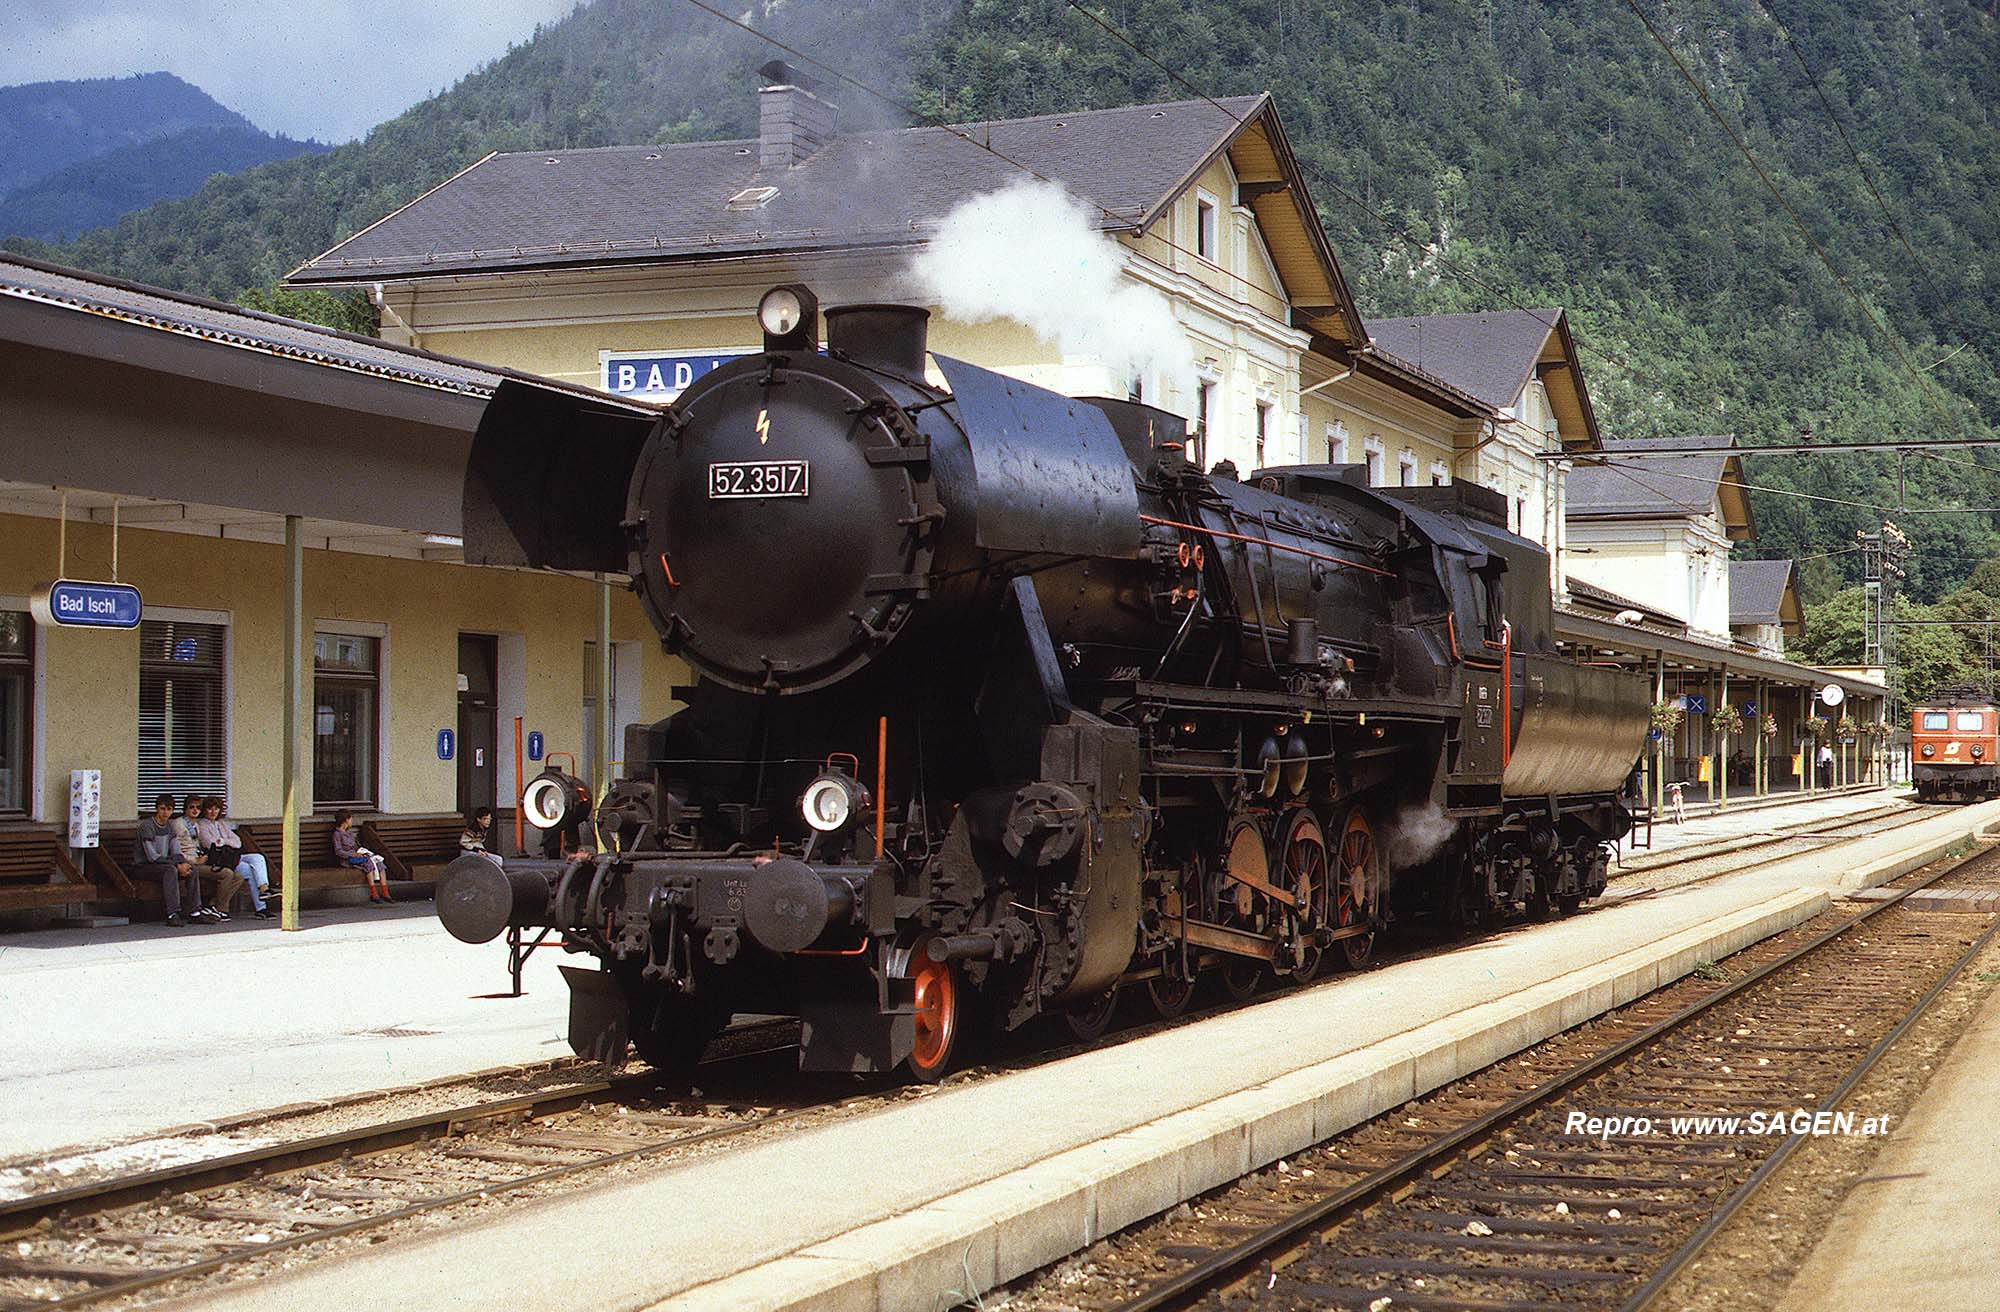 Dampflokomotive ÖBB 52.3517 Bad Ischl